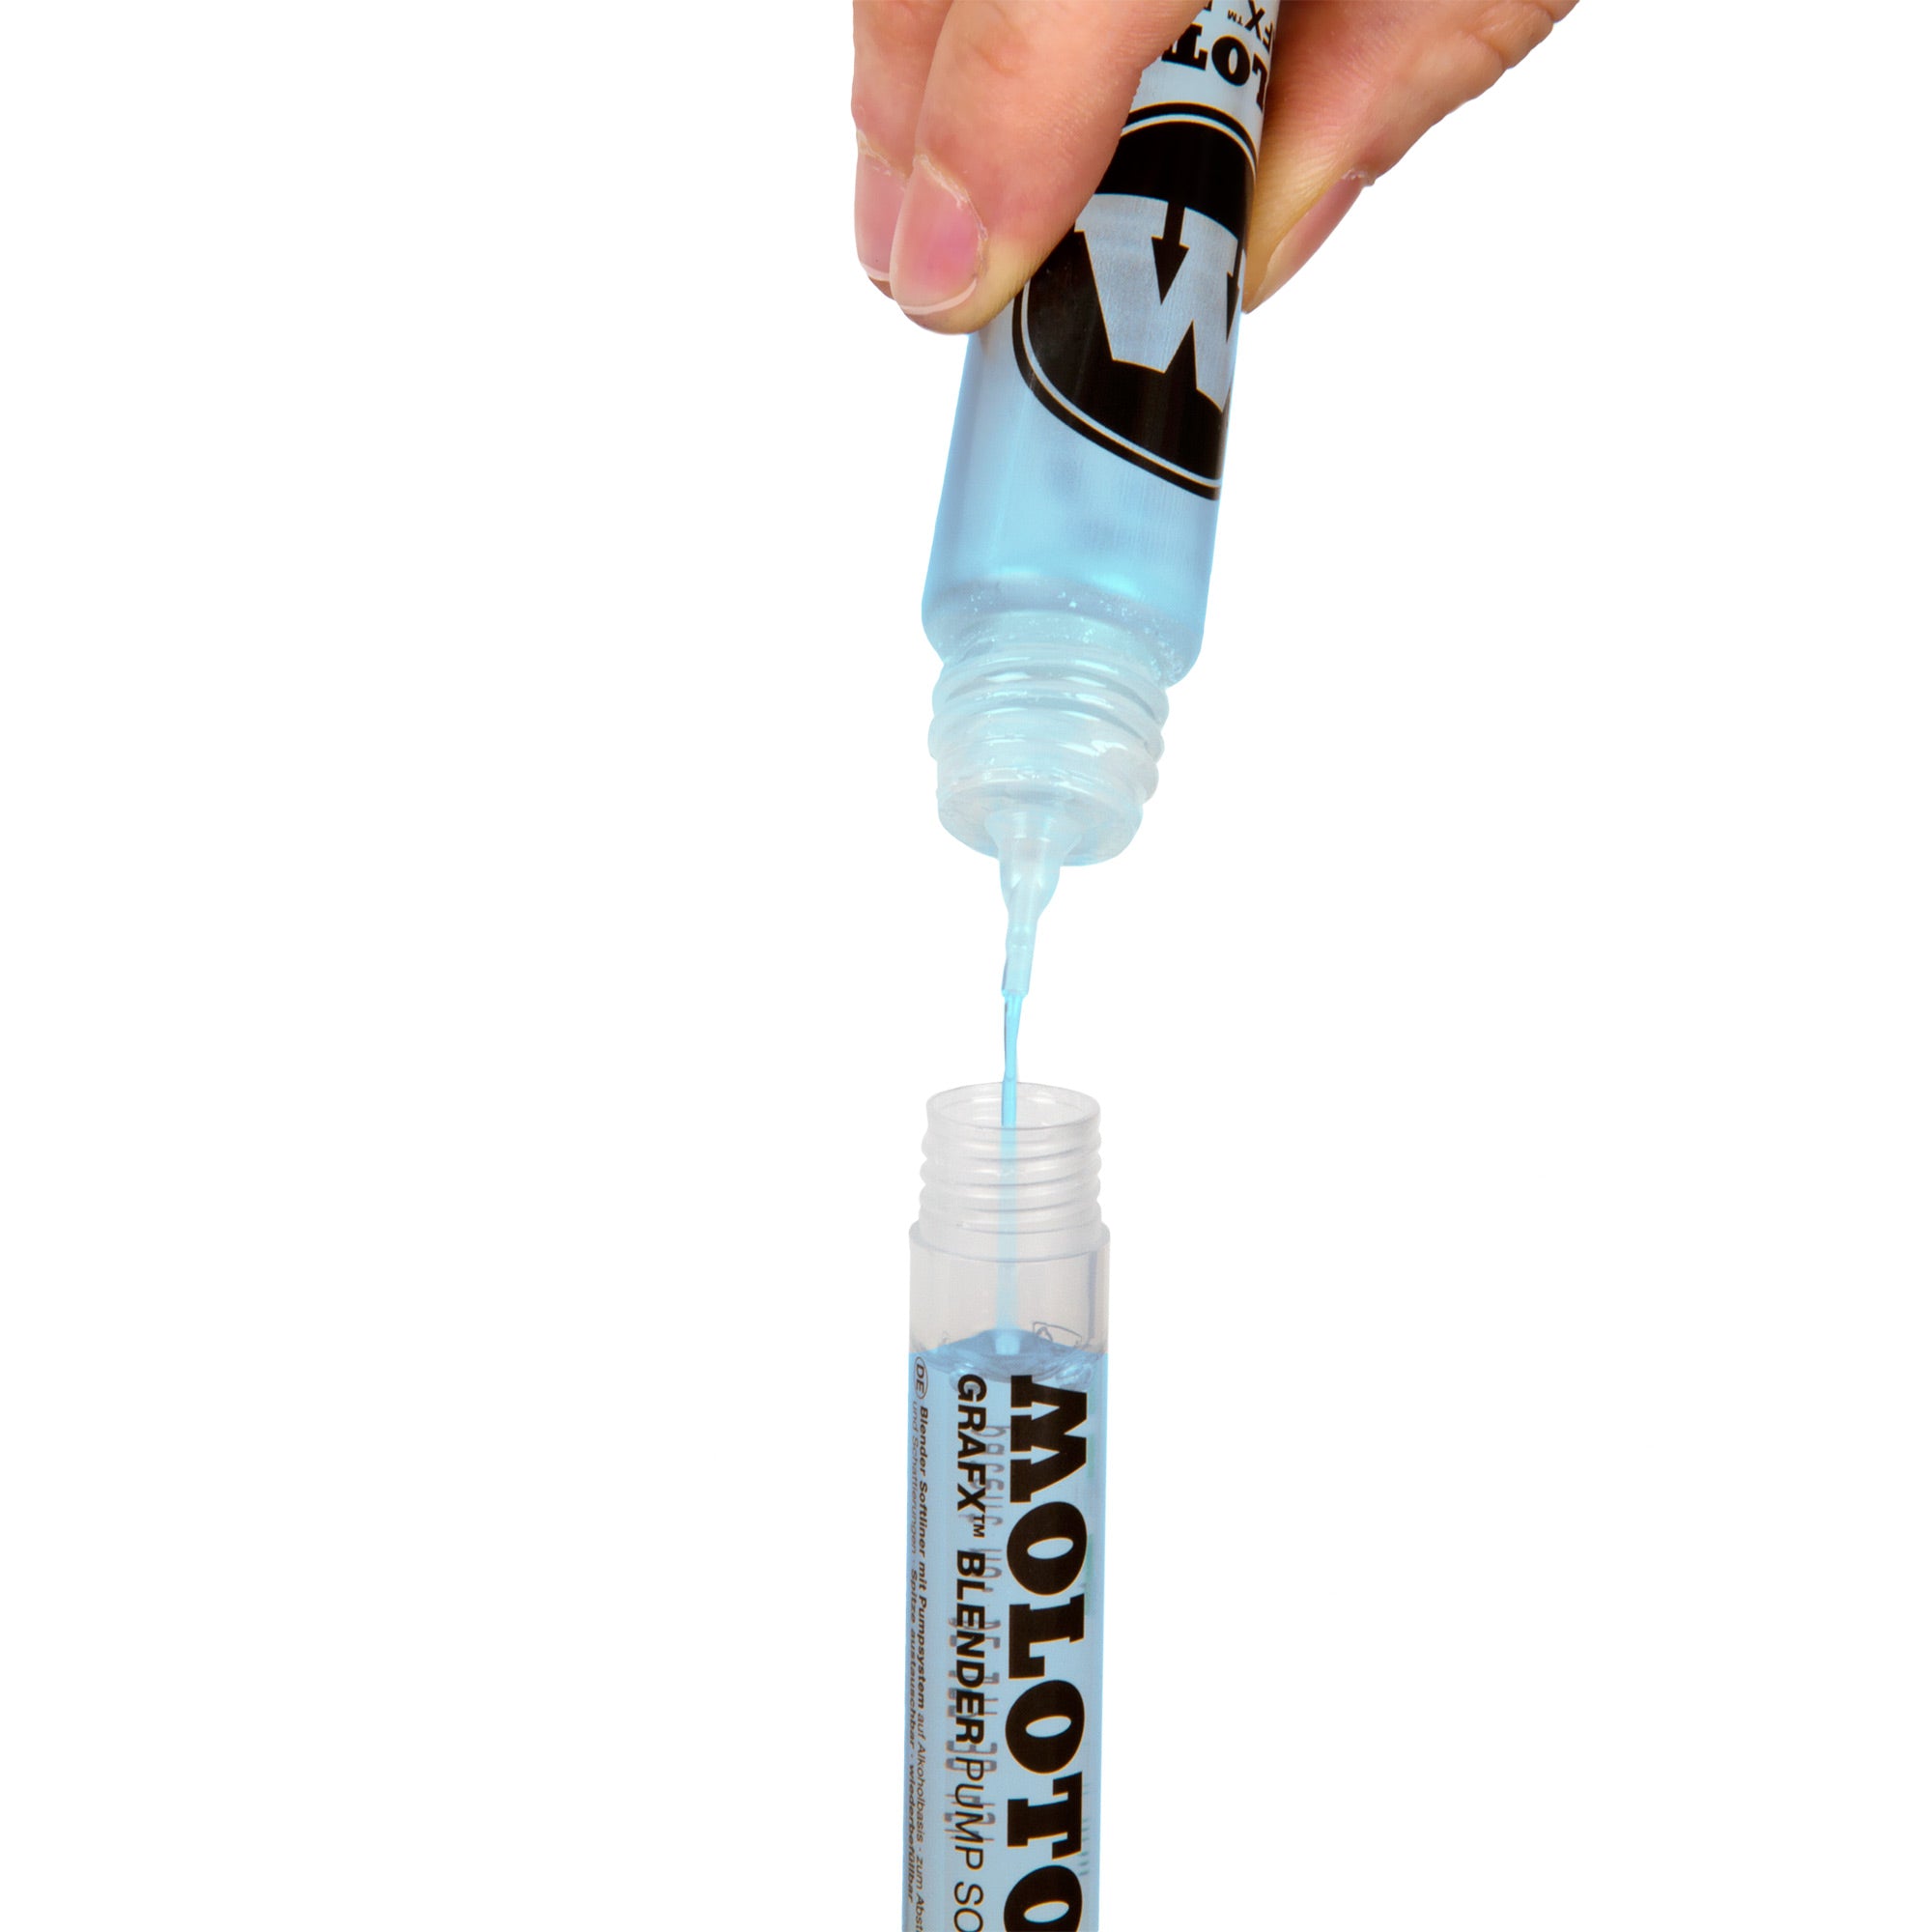 Molotow GRAFX Art Masking Liquid